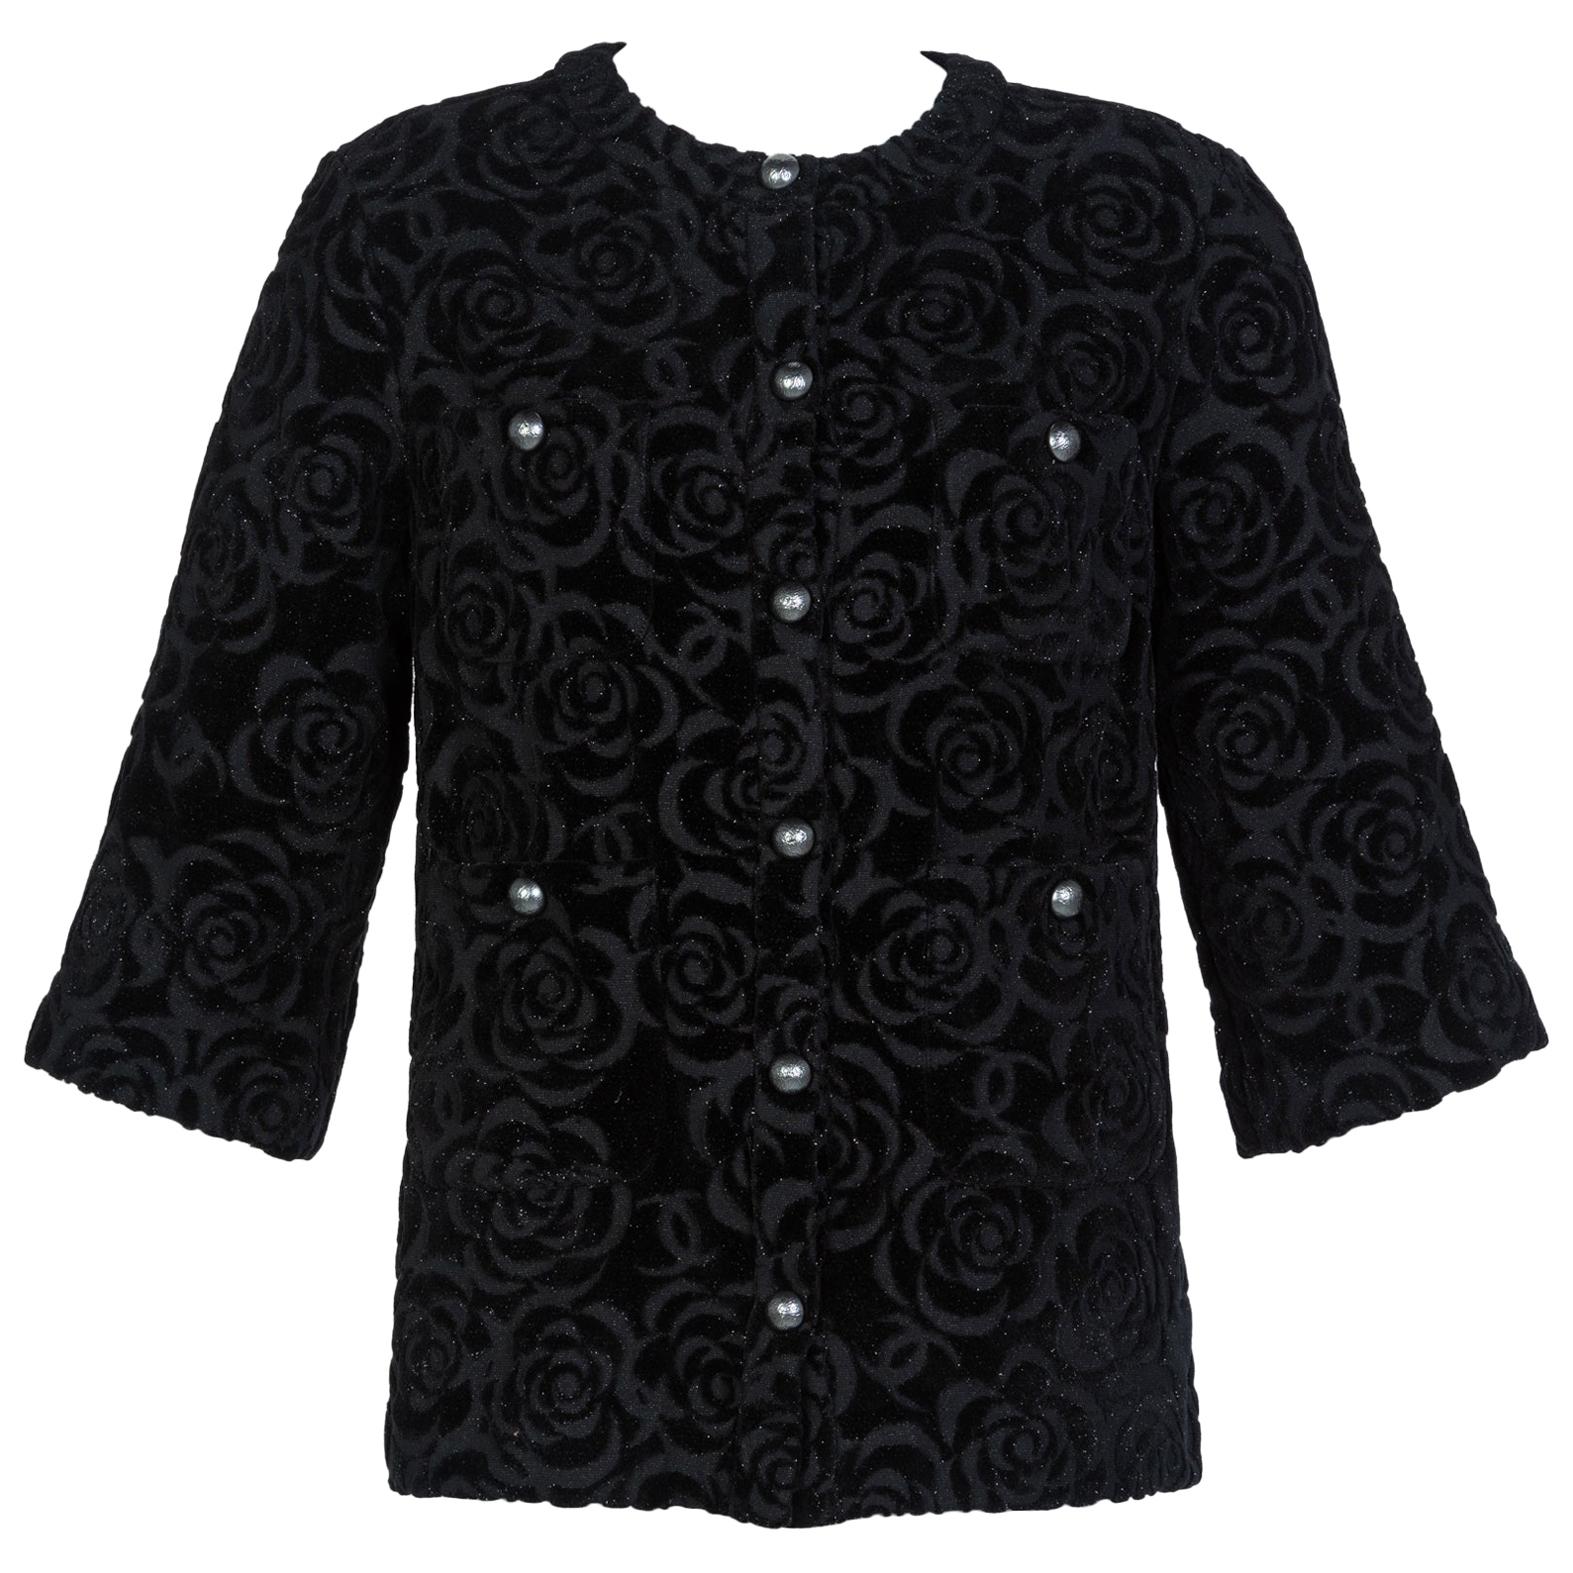 pre-loved authentic CHANEL size 38 Black Cotton & Silk CAPELET retail  $3300